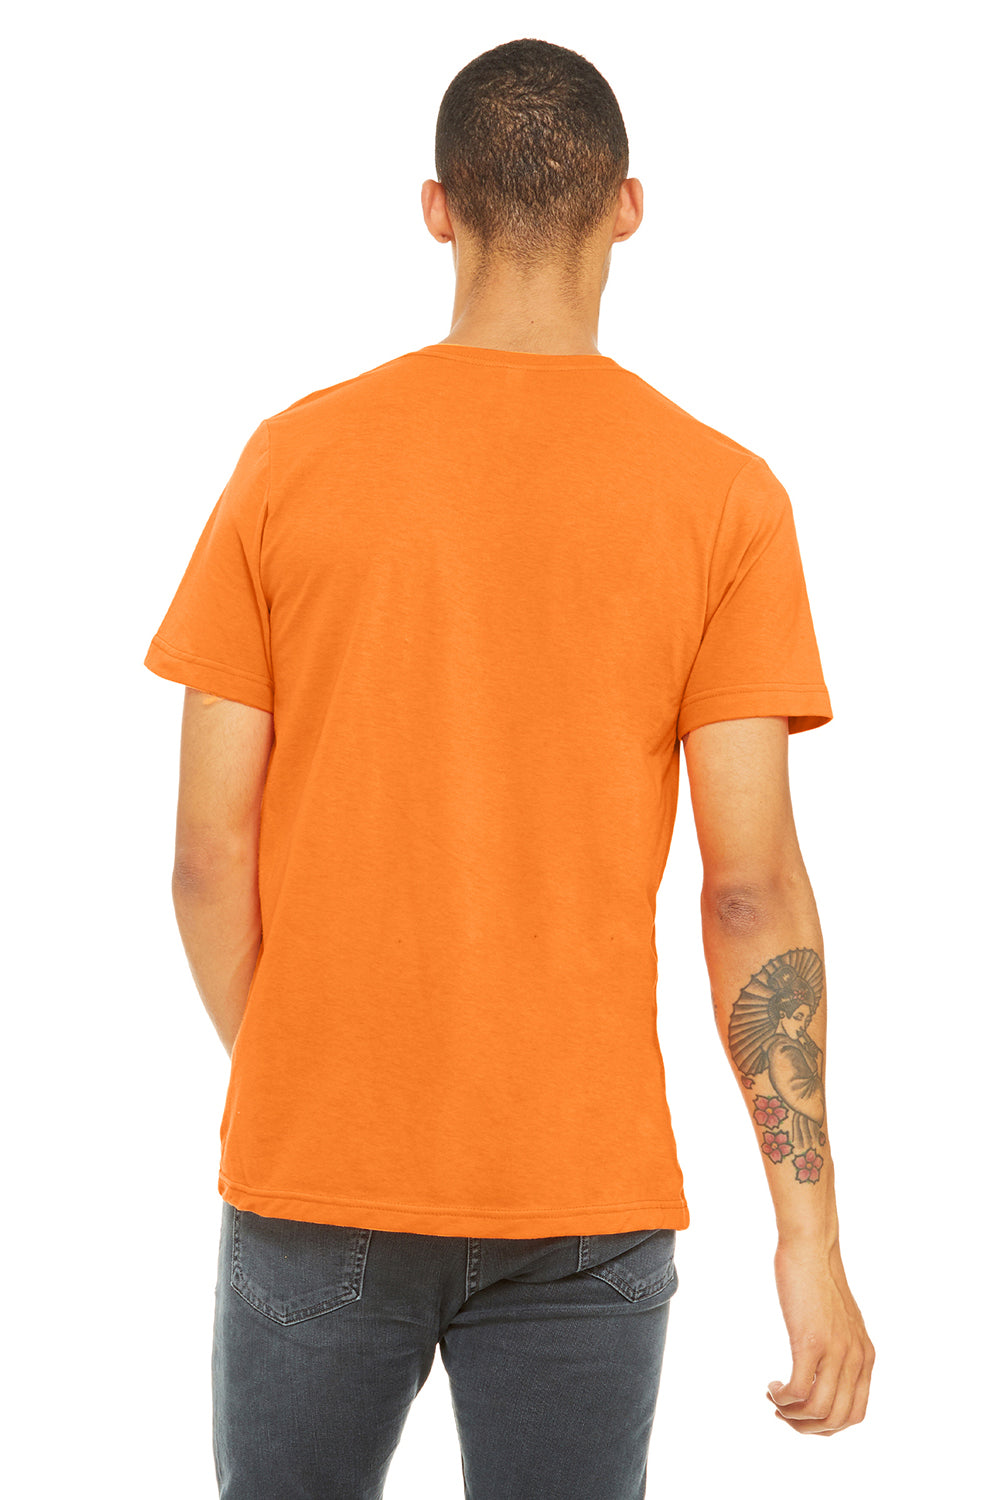 Bella + Canvas 3650 Mens Short Sleeve Crewneck T-Shirt Neon Orange Back